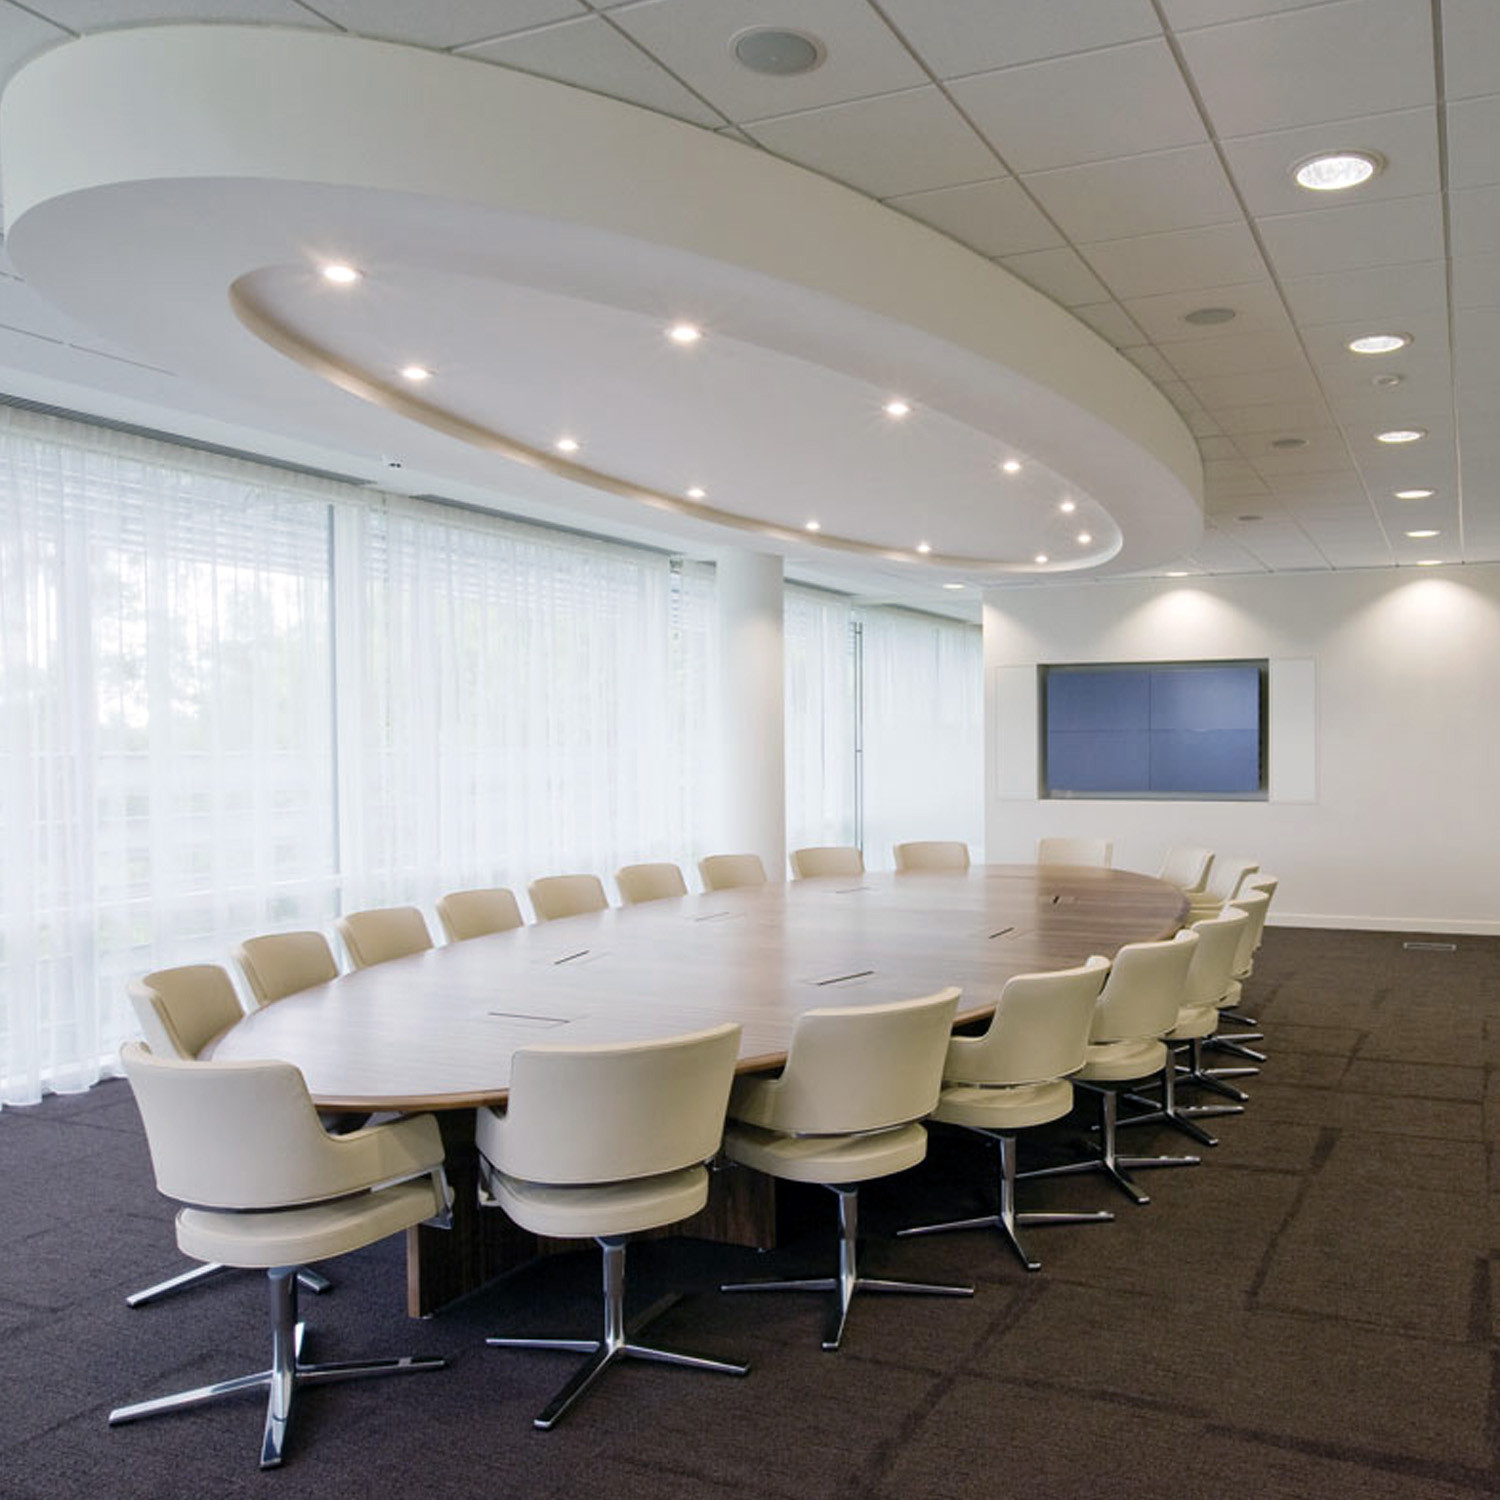 Bespoke Oval Meeting Room Table